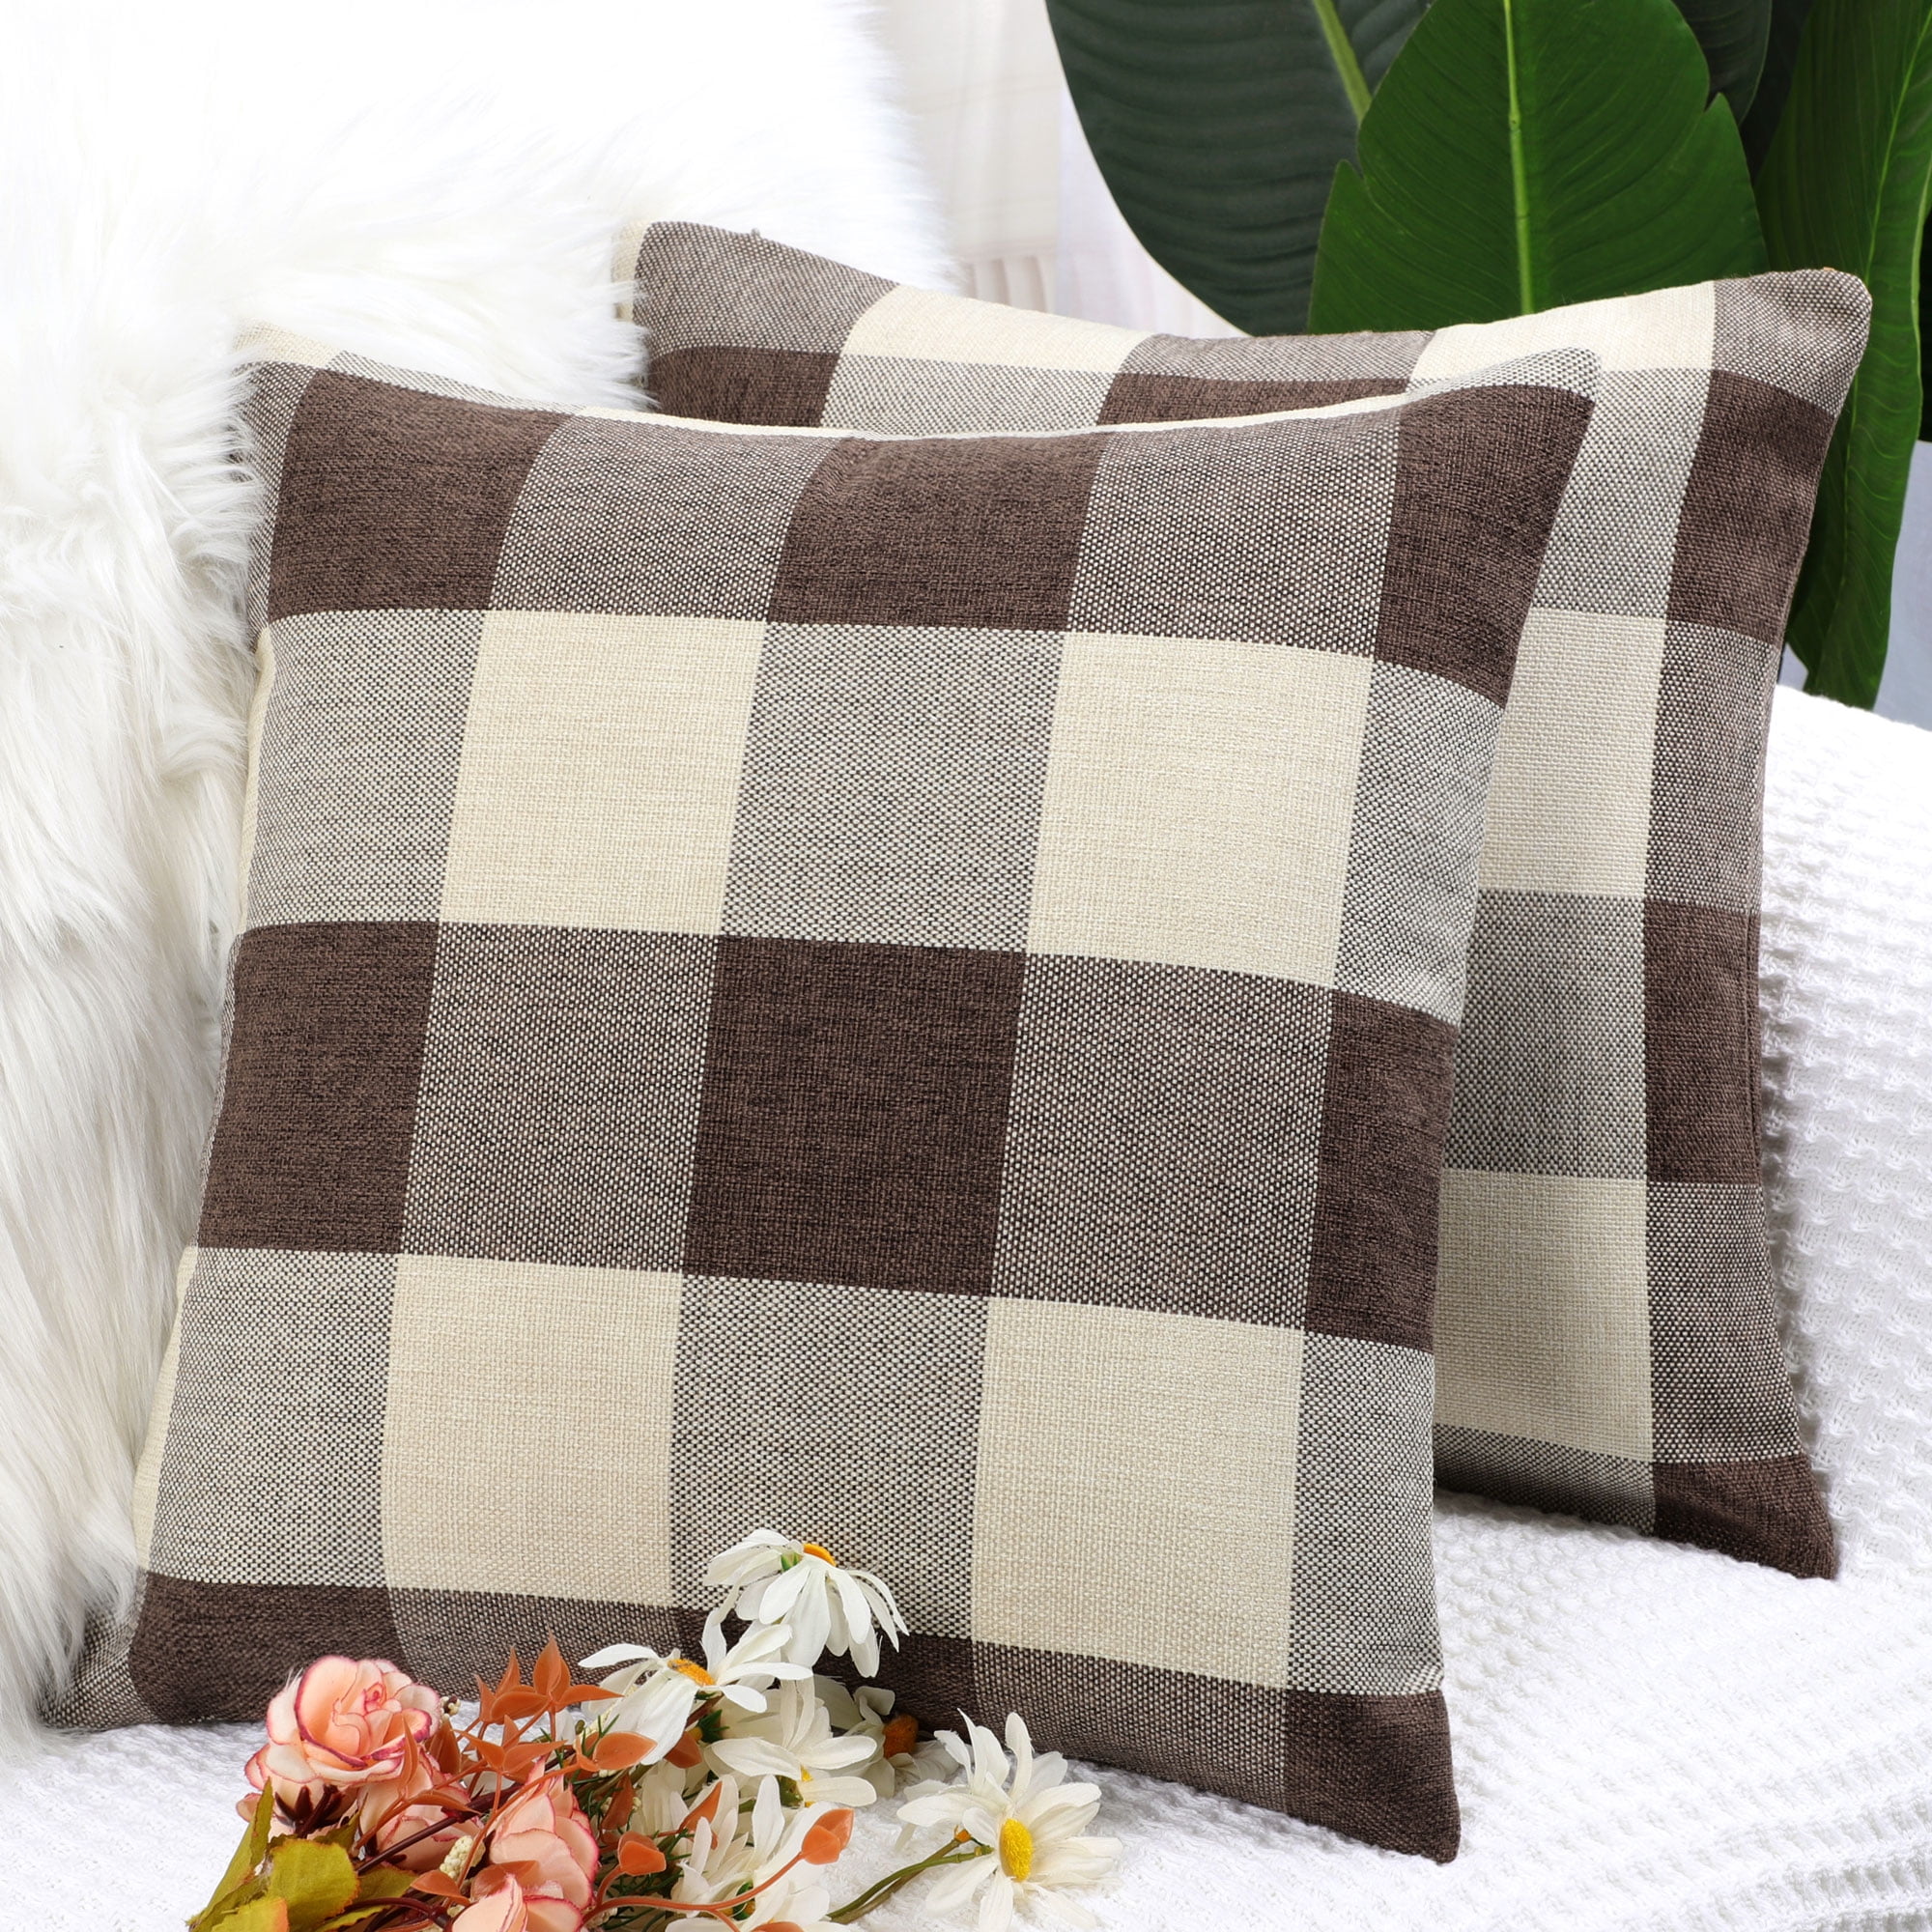 Cotton Standard Pillowcases Throw Cushion Cover Home Decor Multiple Color 2Pcs 